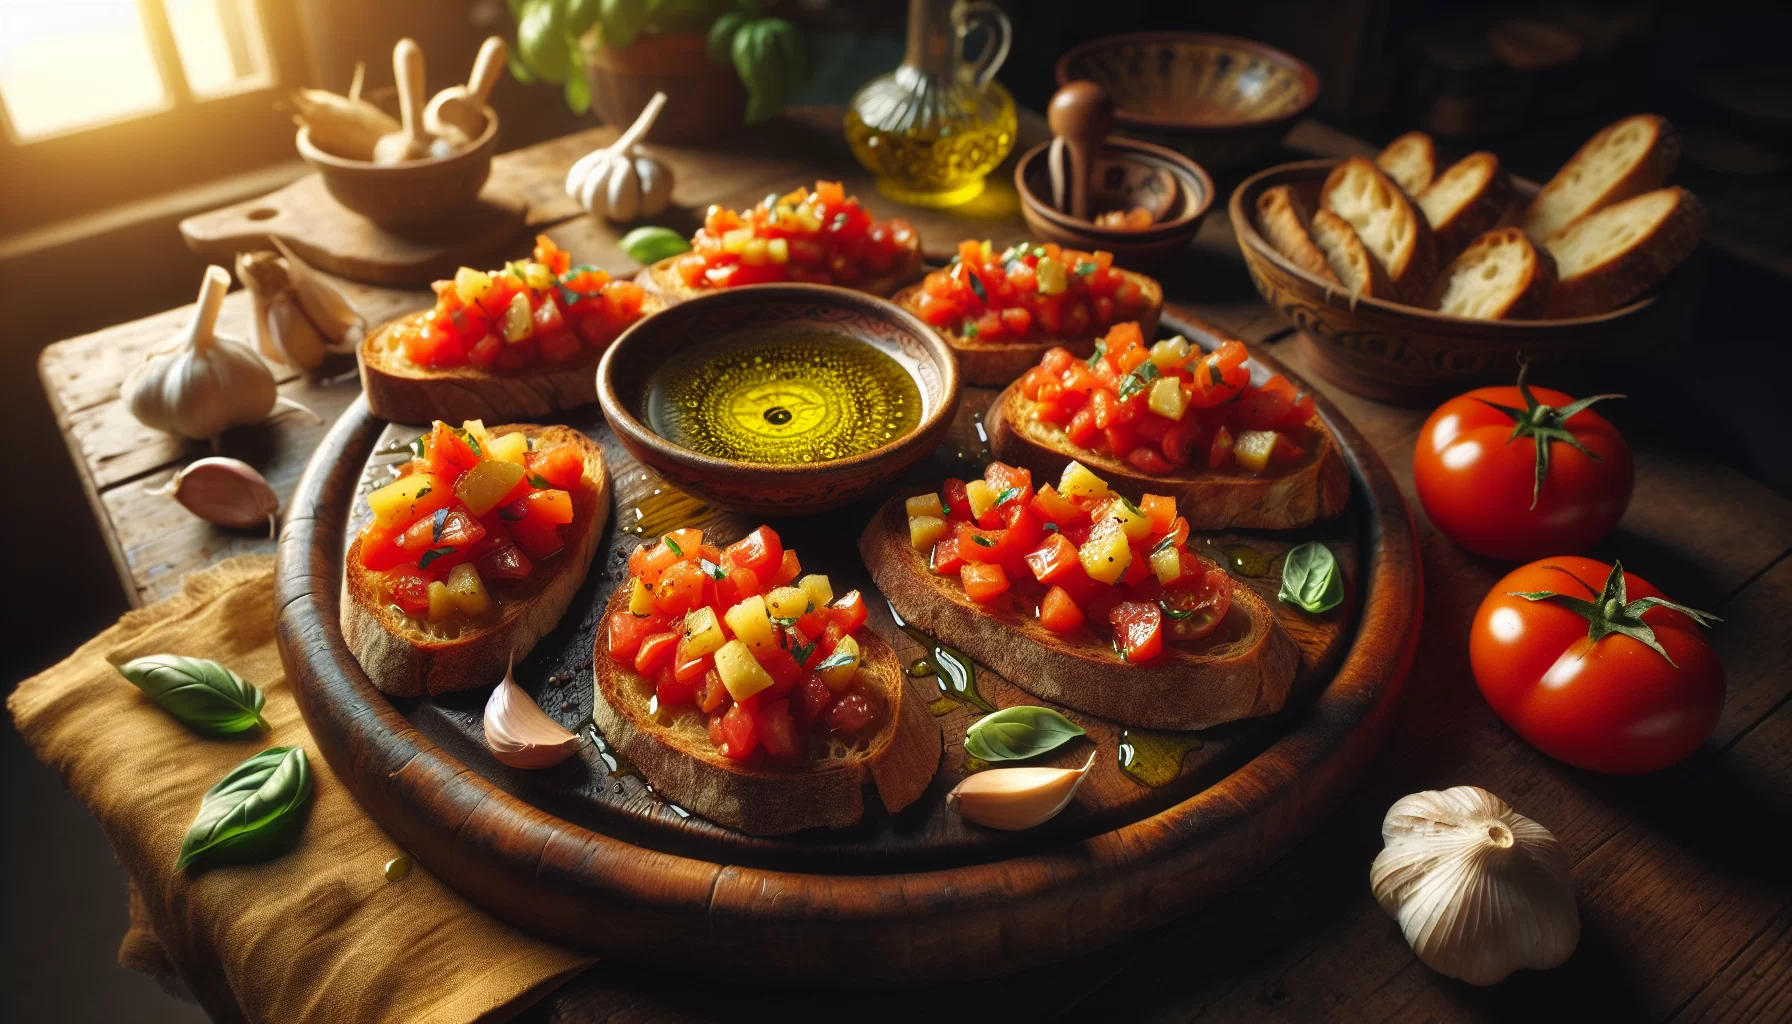 Experience a classic Italian dish renewed: the ginger-tomato bruschetta delight